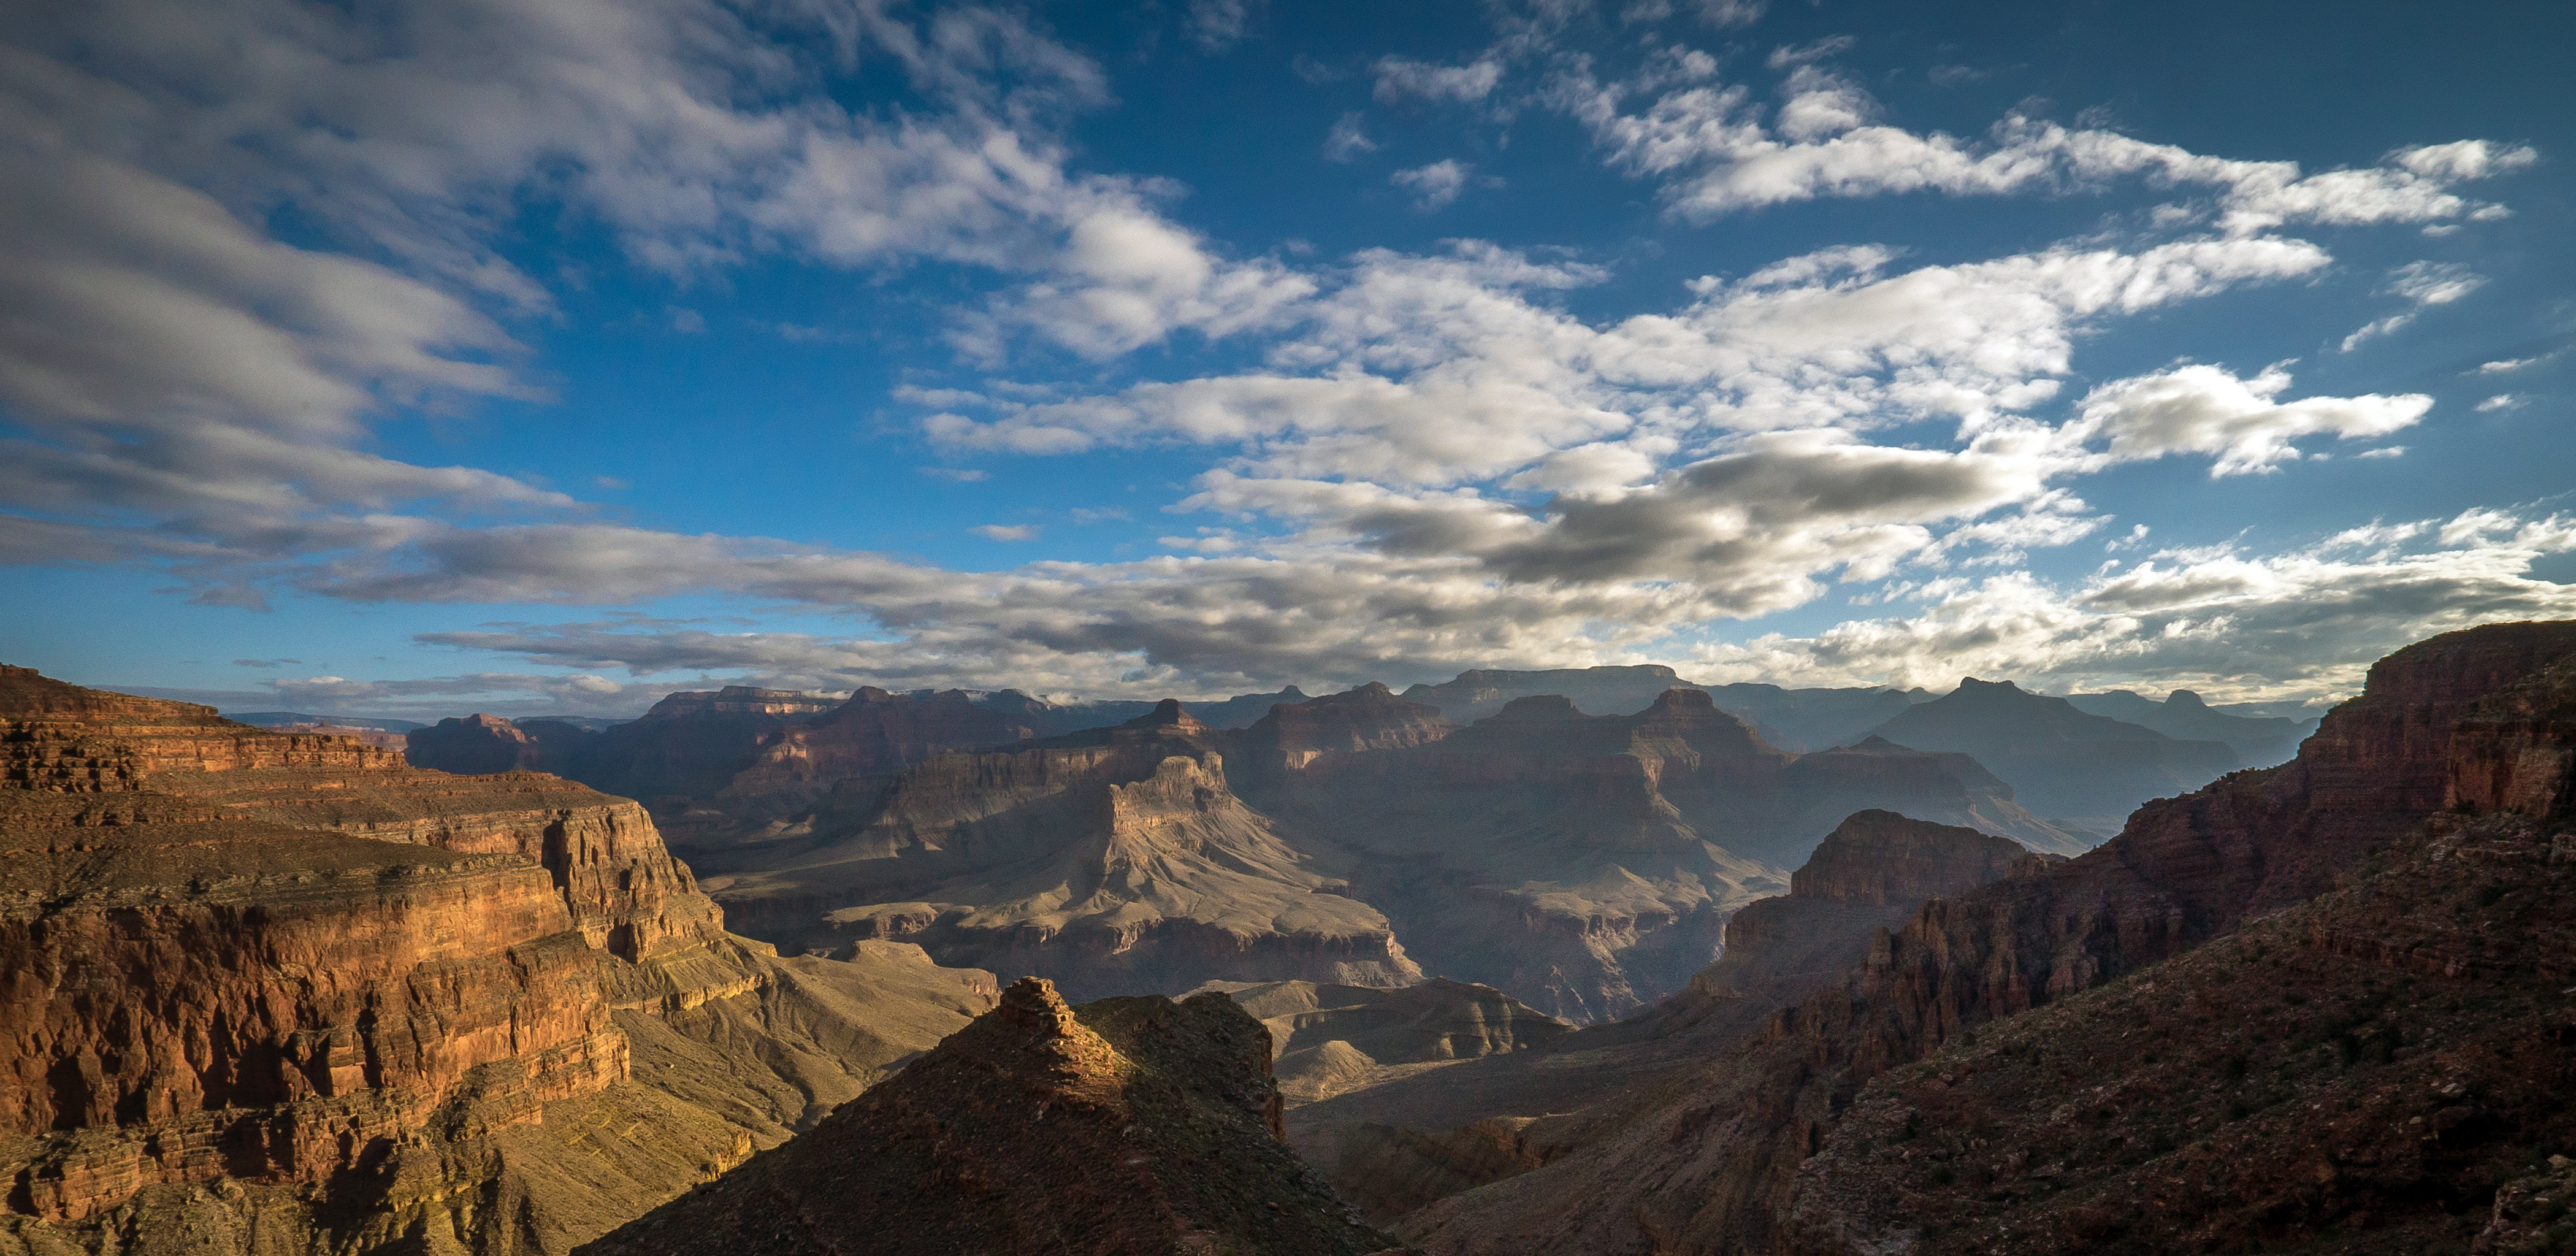 Grand Canyon, Arizona – The Hermit Trail